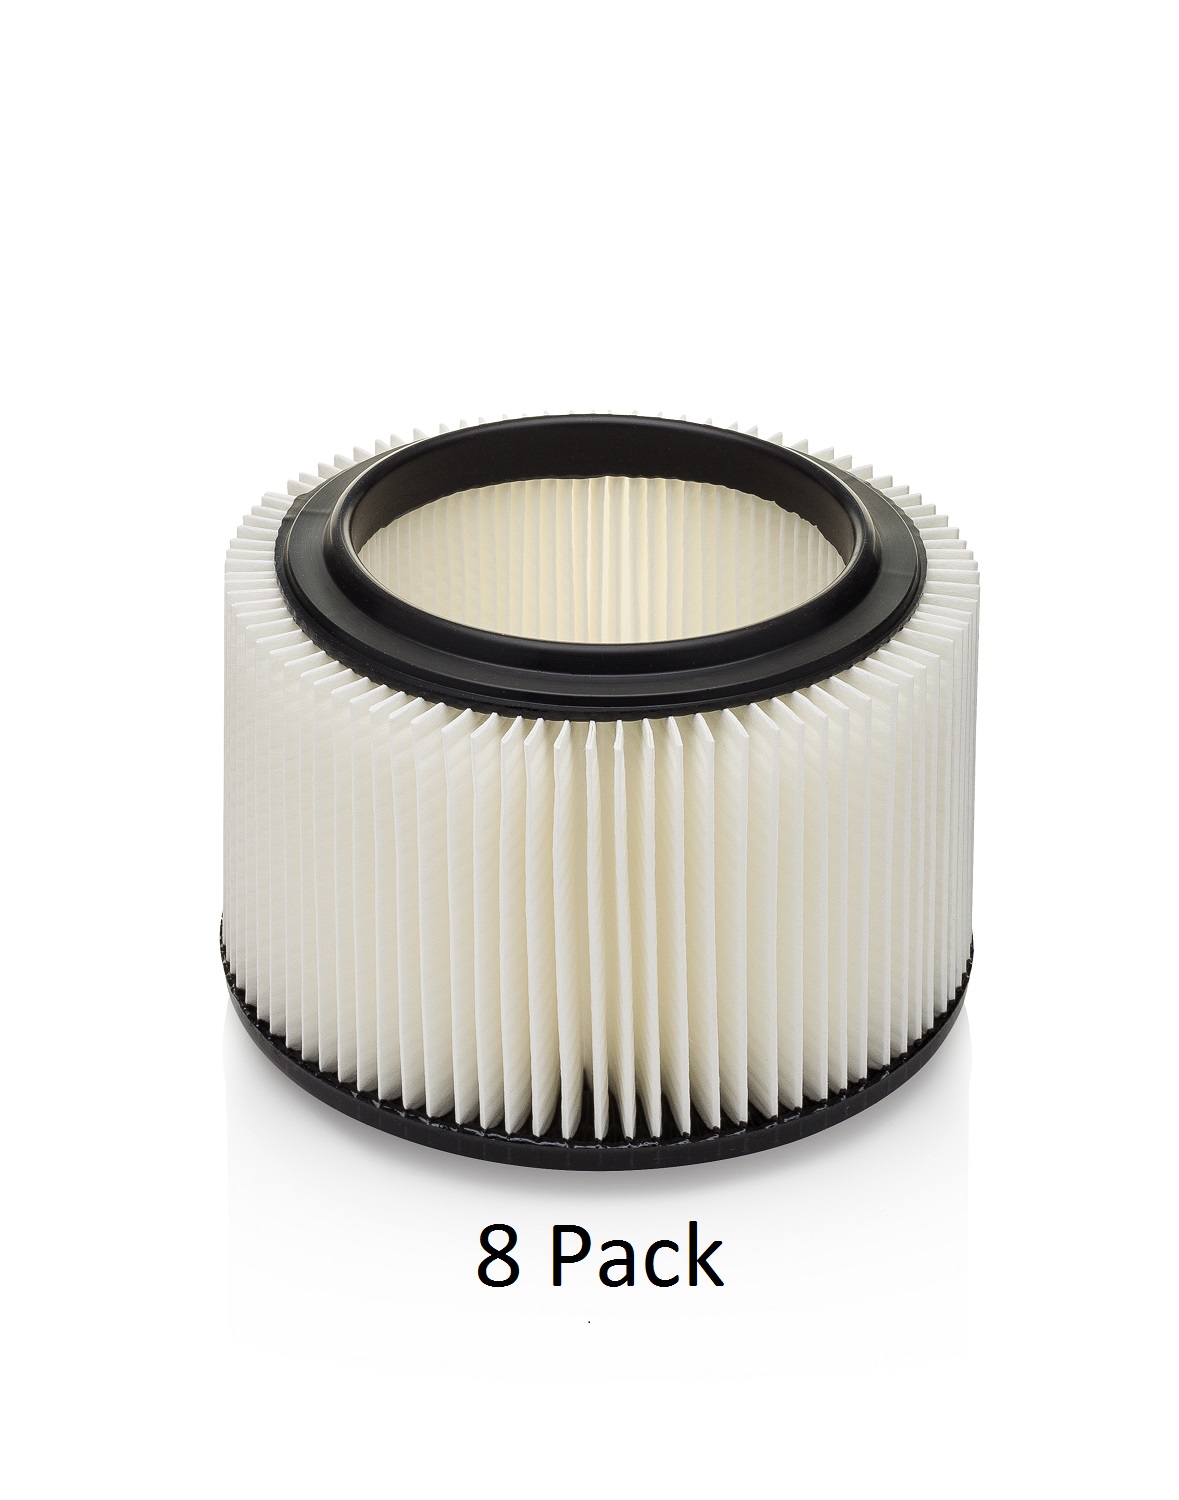 KoPach Filter Craftsman 3 & 4 gal. Replacement Filter 8 pack, Part # 17810